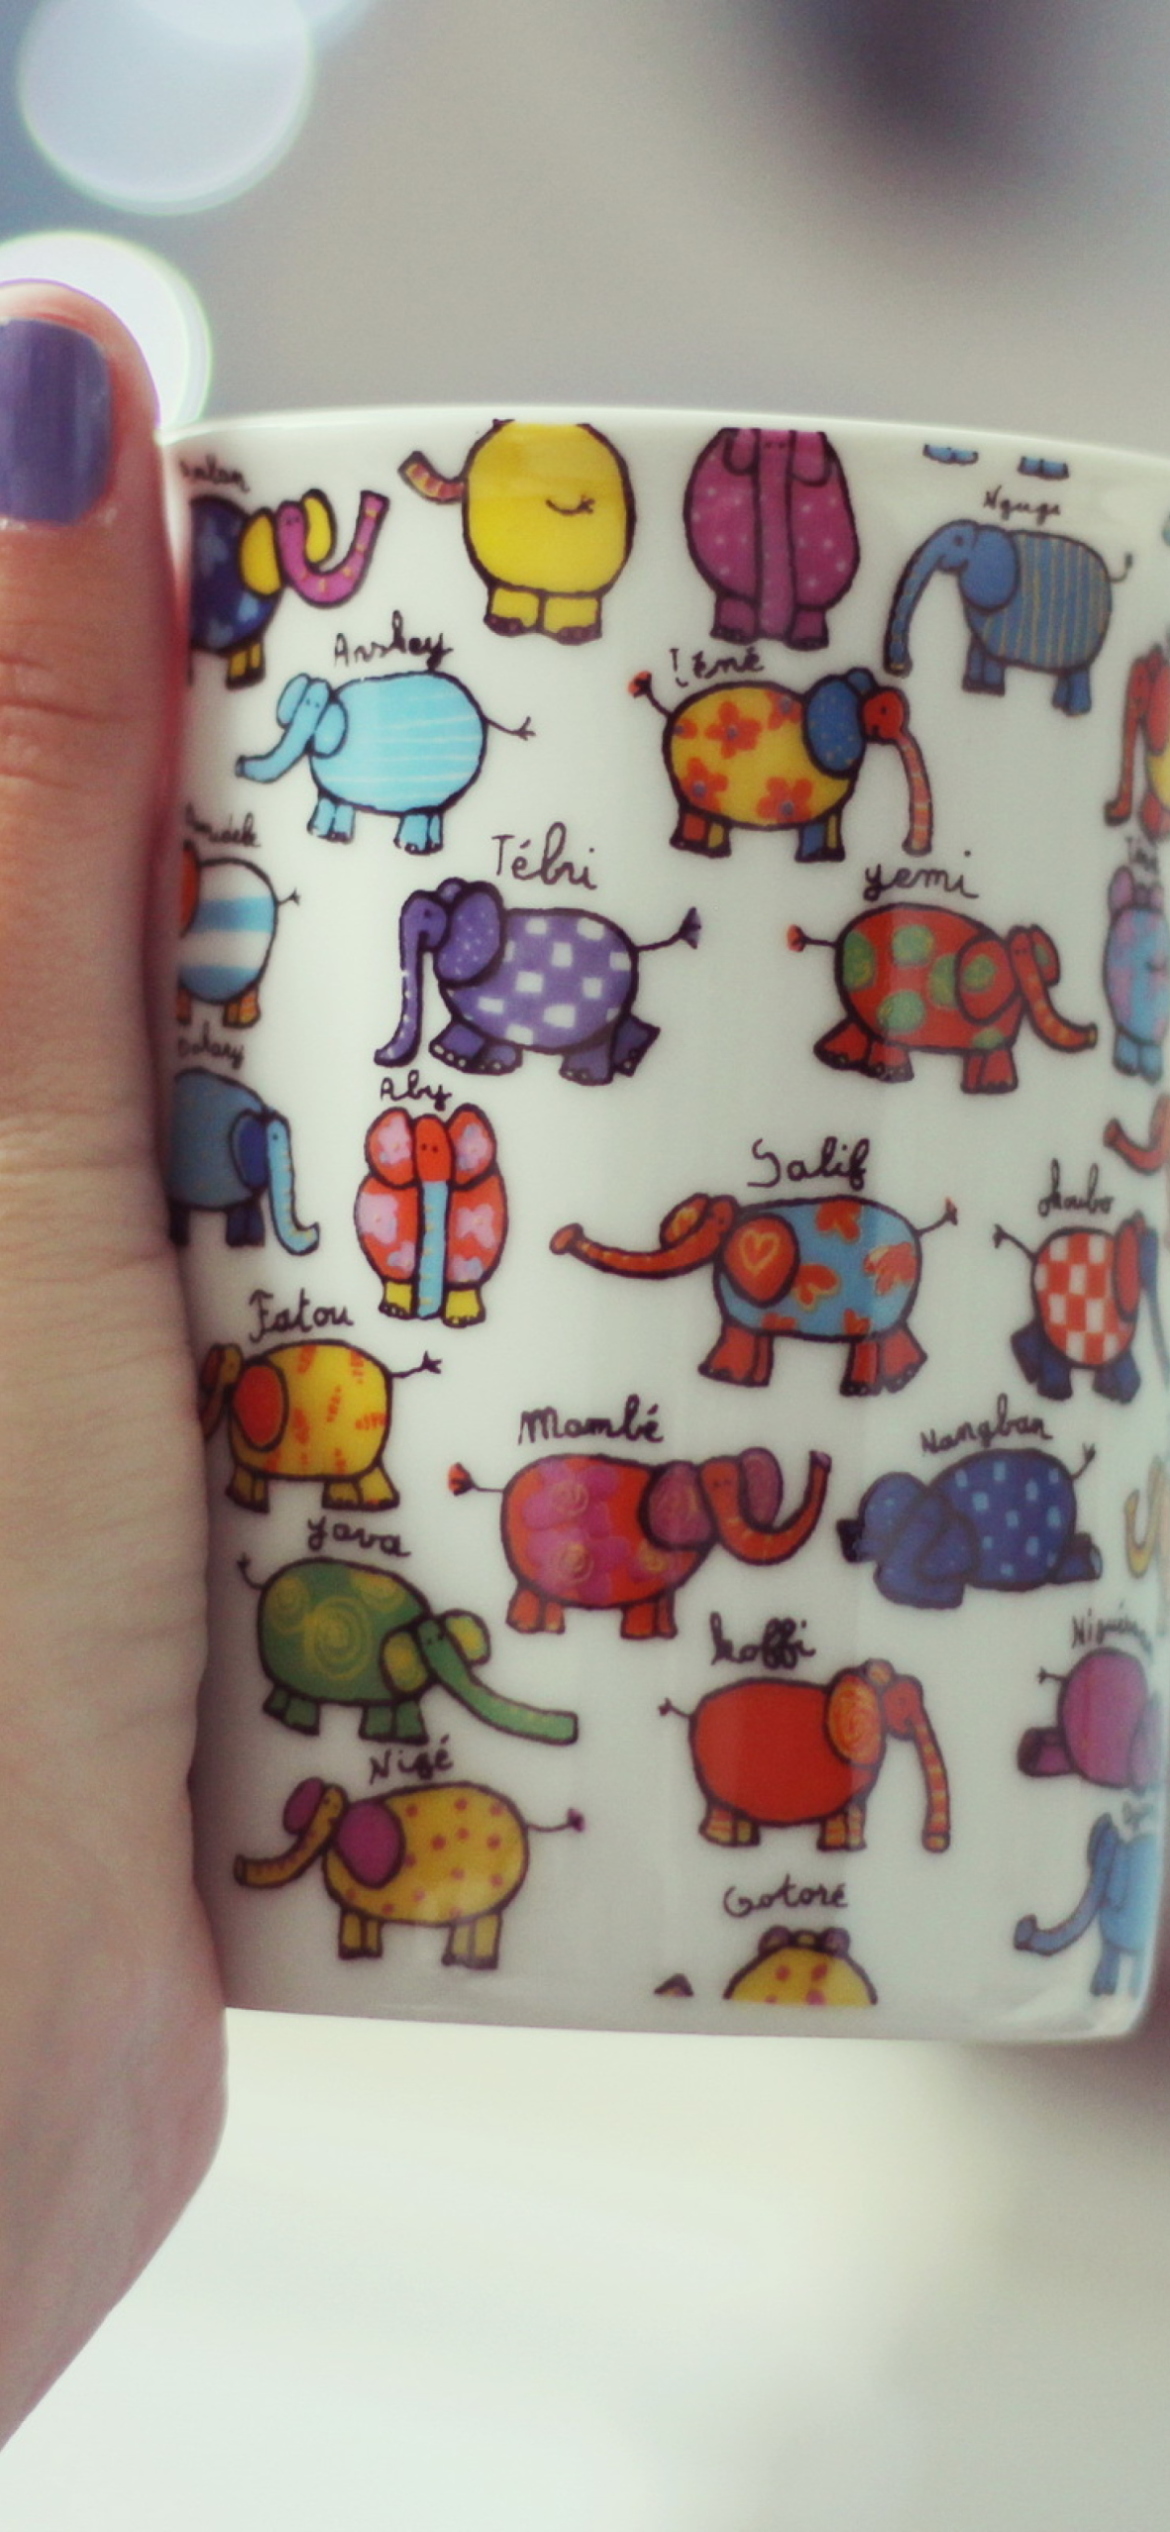 Funny Mug With Elephants wallpaper 1170x2532